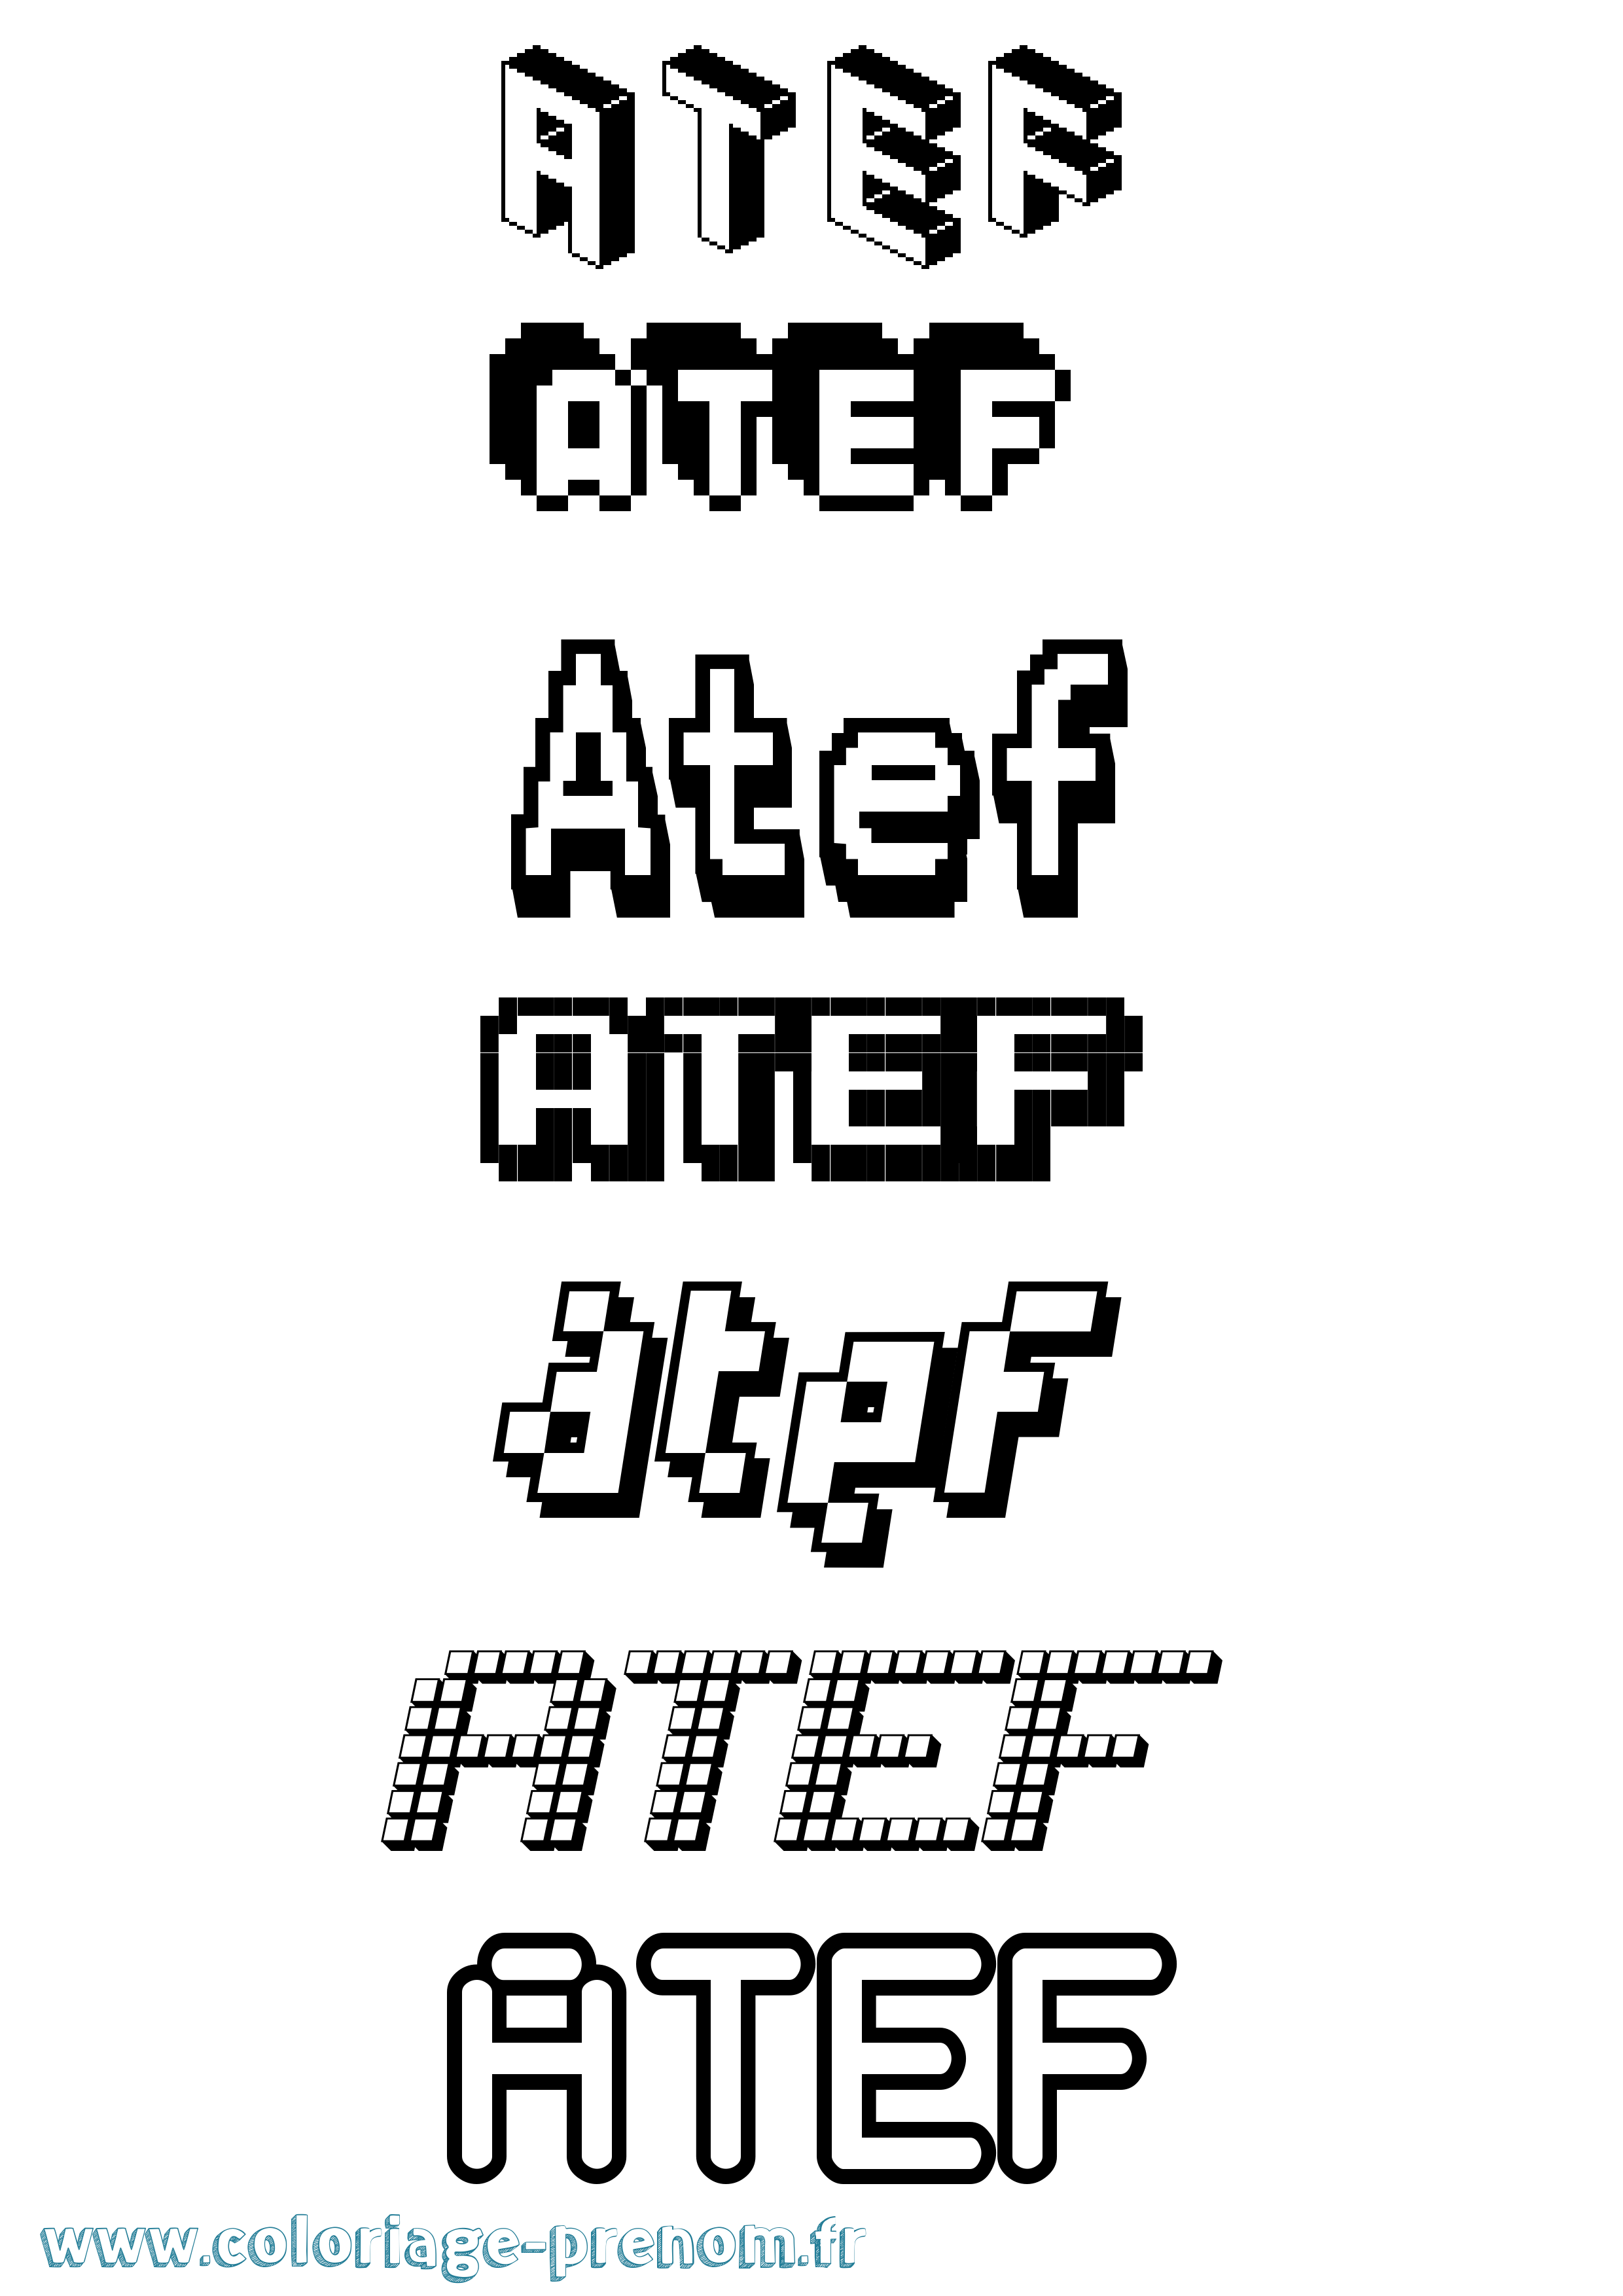 Coloriage prénom Atef Pixel